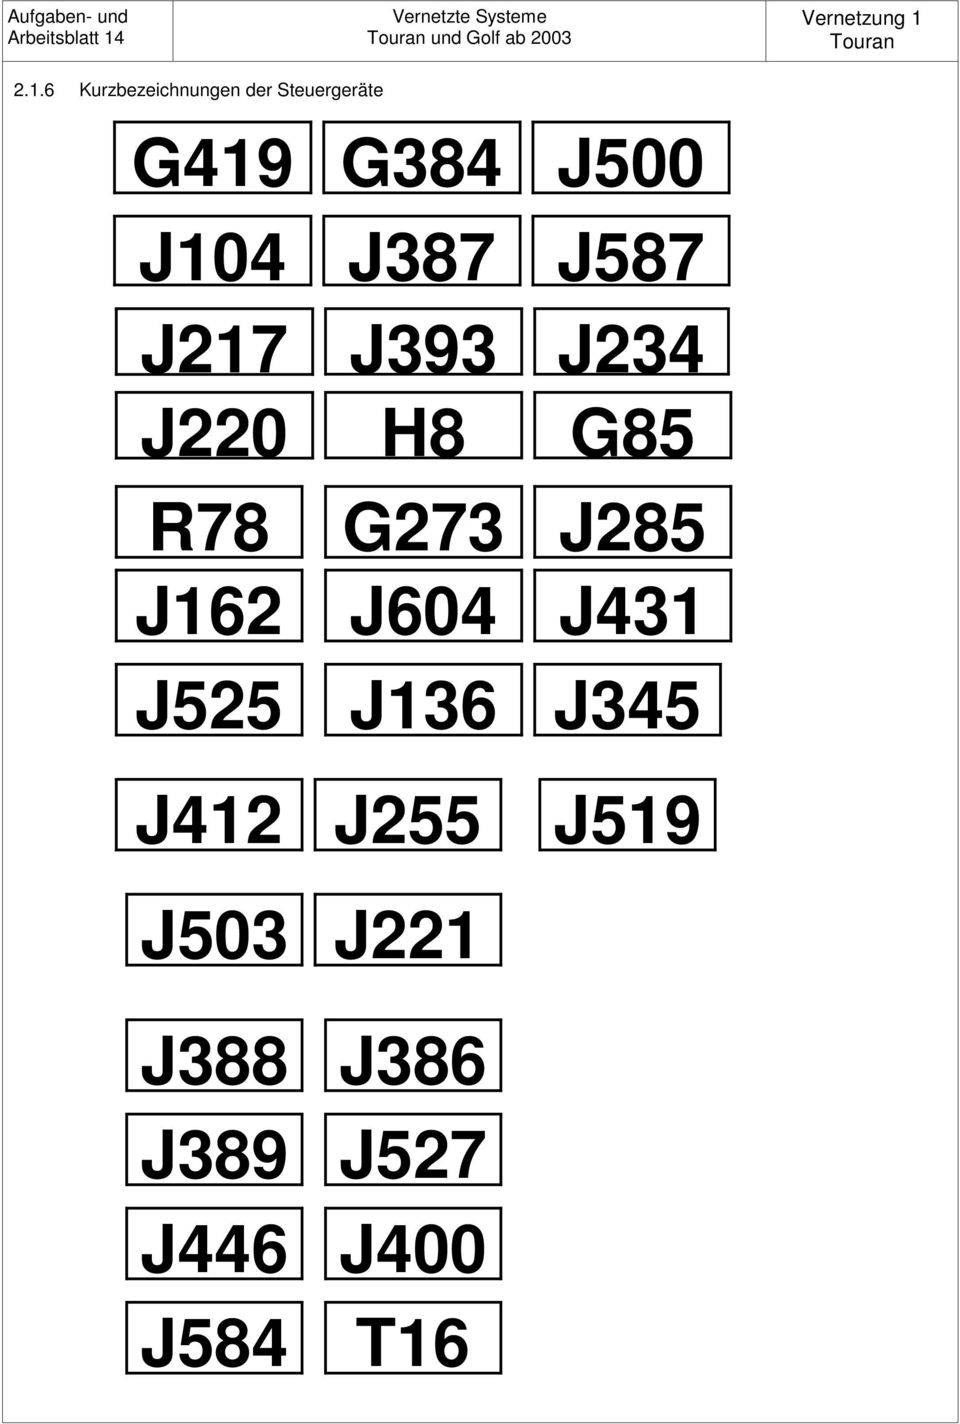 R78 J162 J525 J412 J503 J388 J389 J446 J584 G384